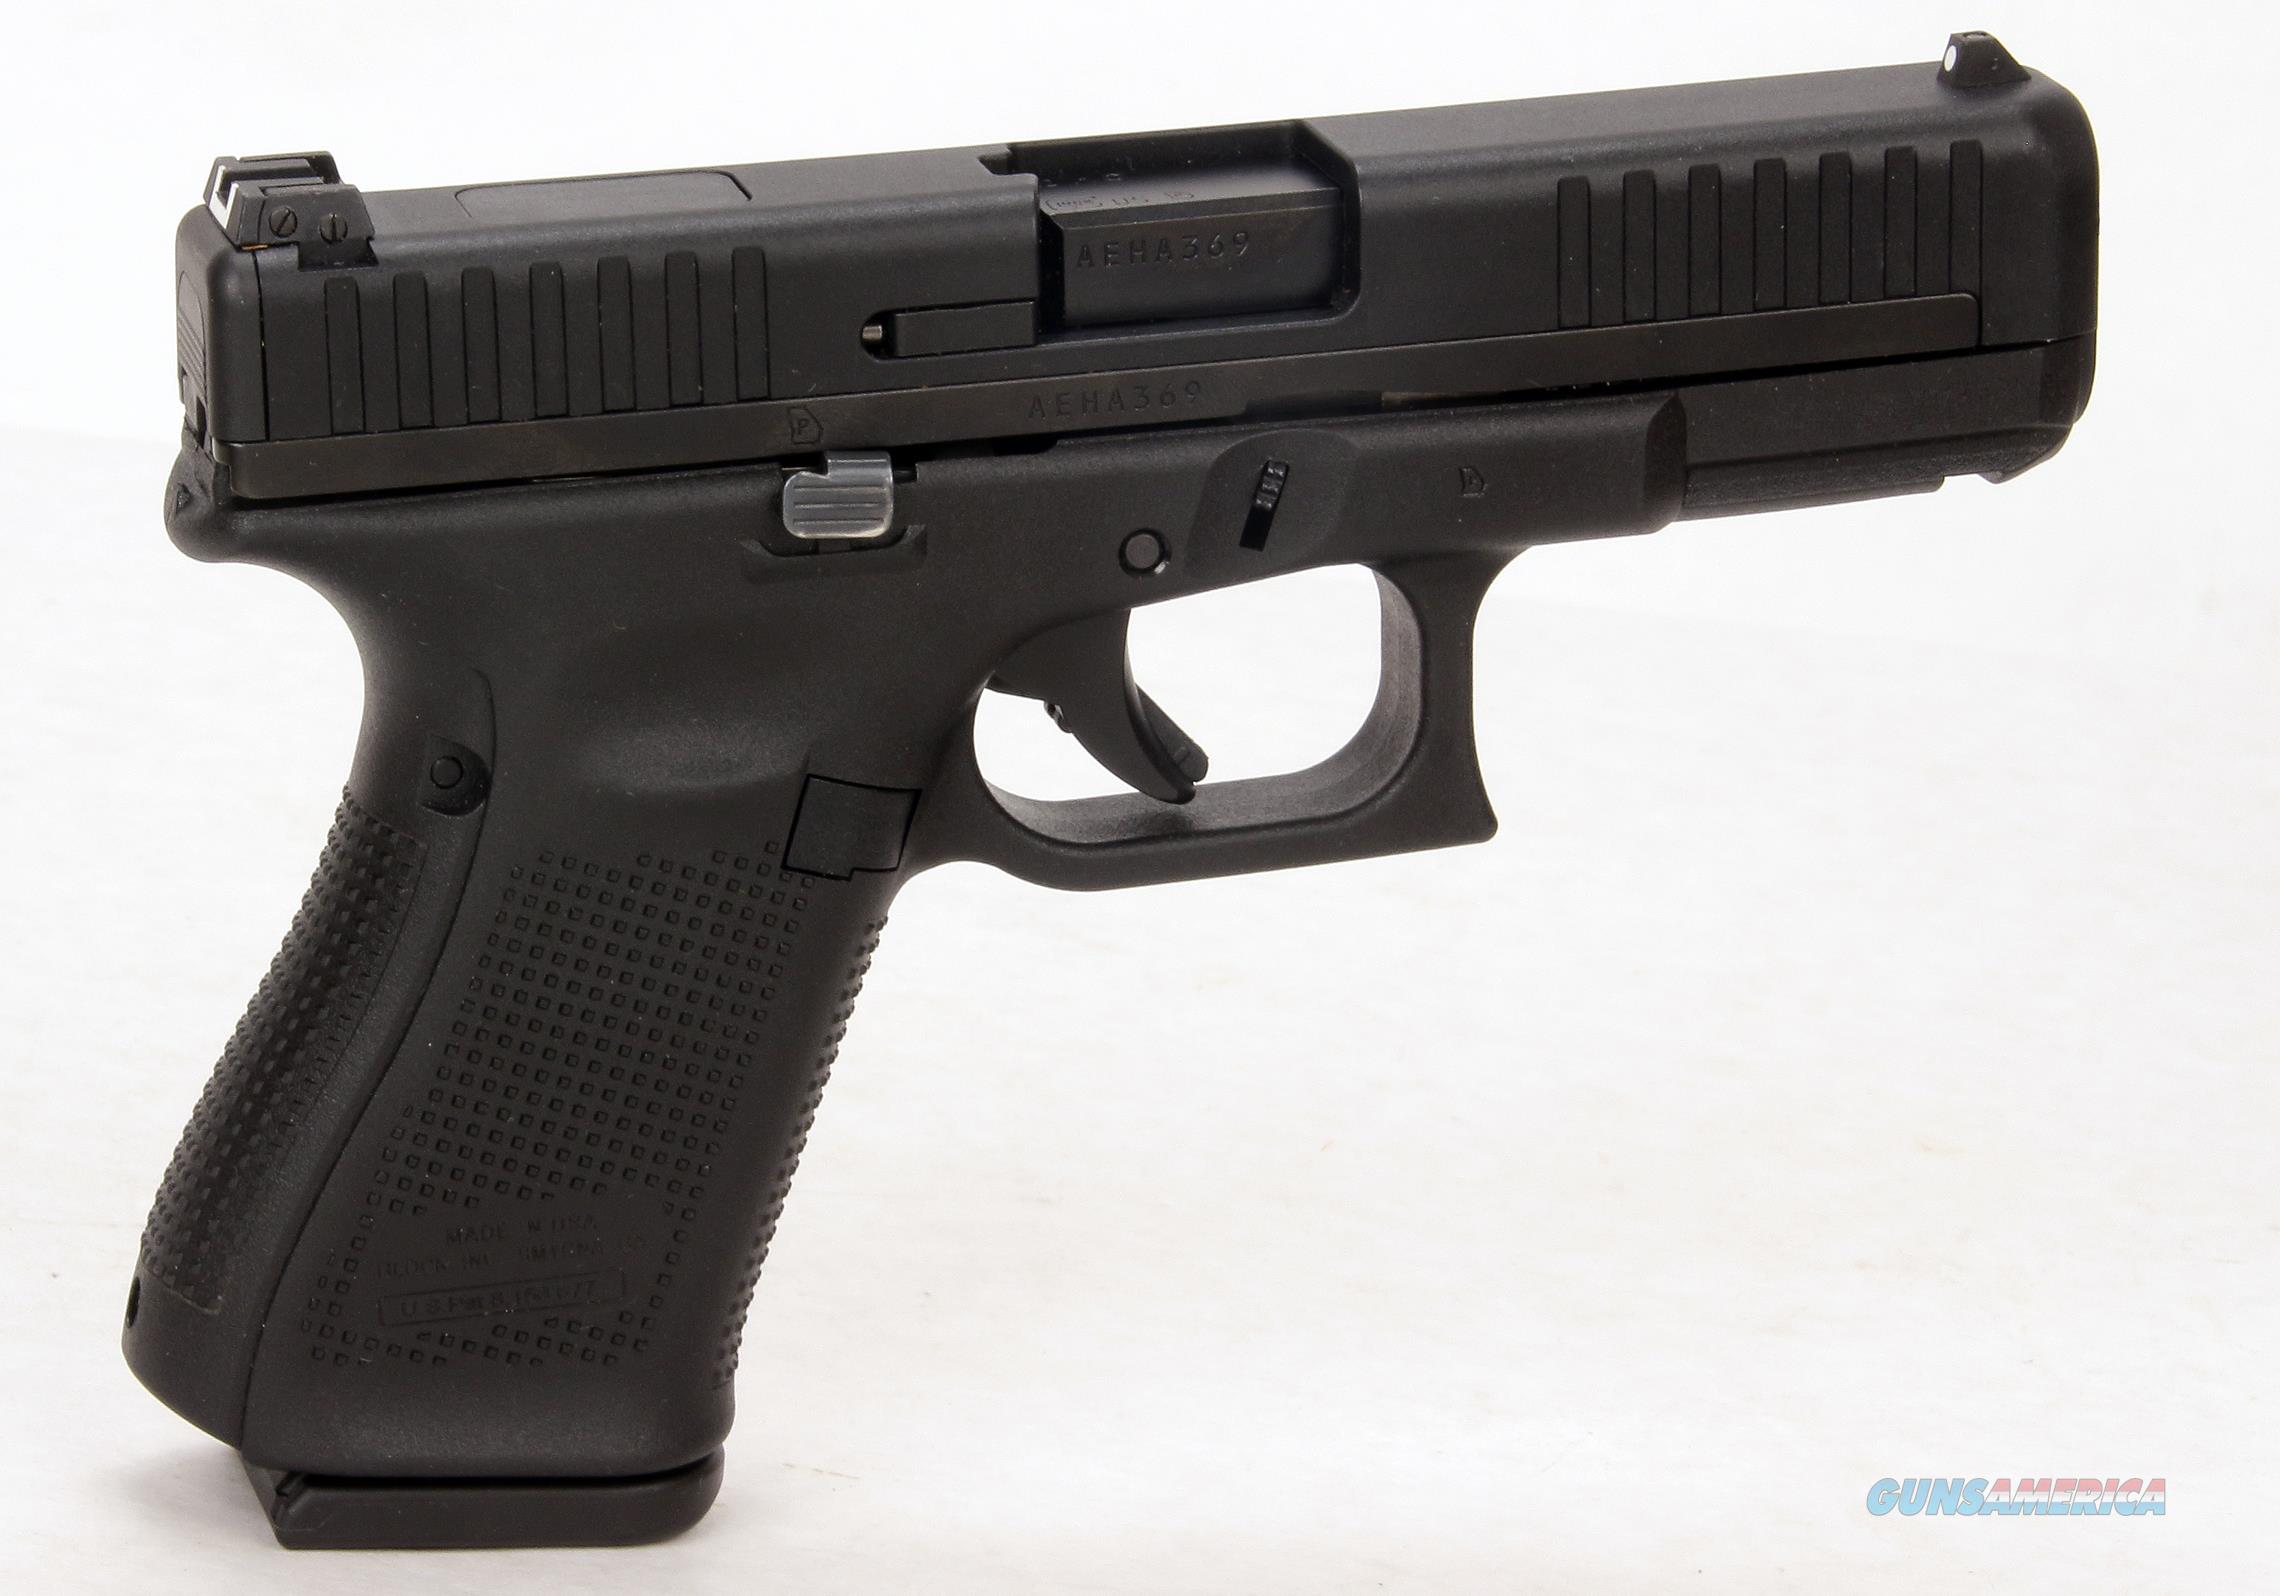 Glock Lr Model Pistol For Sale At Gunsamerica Com